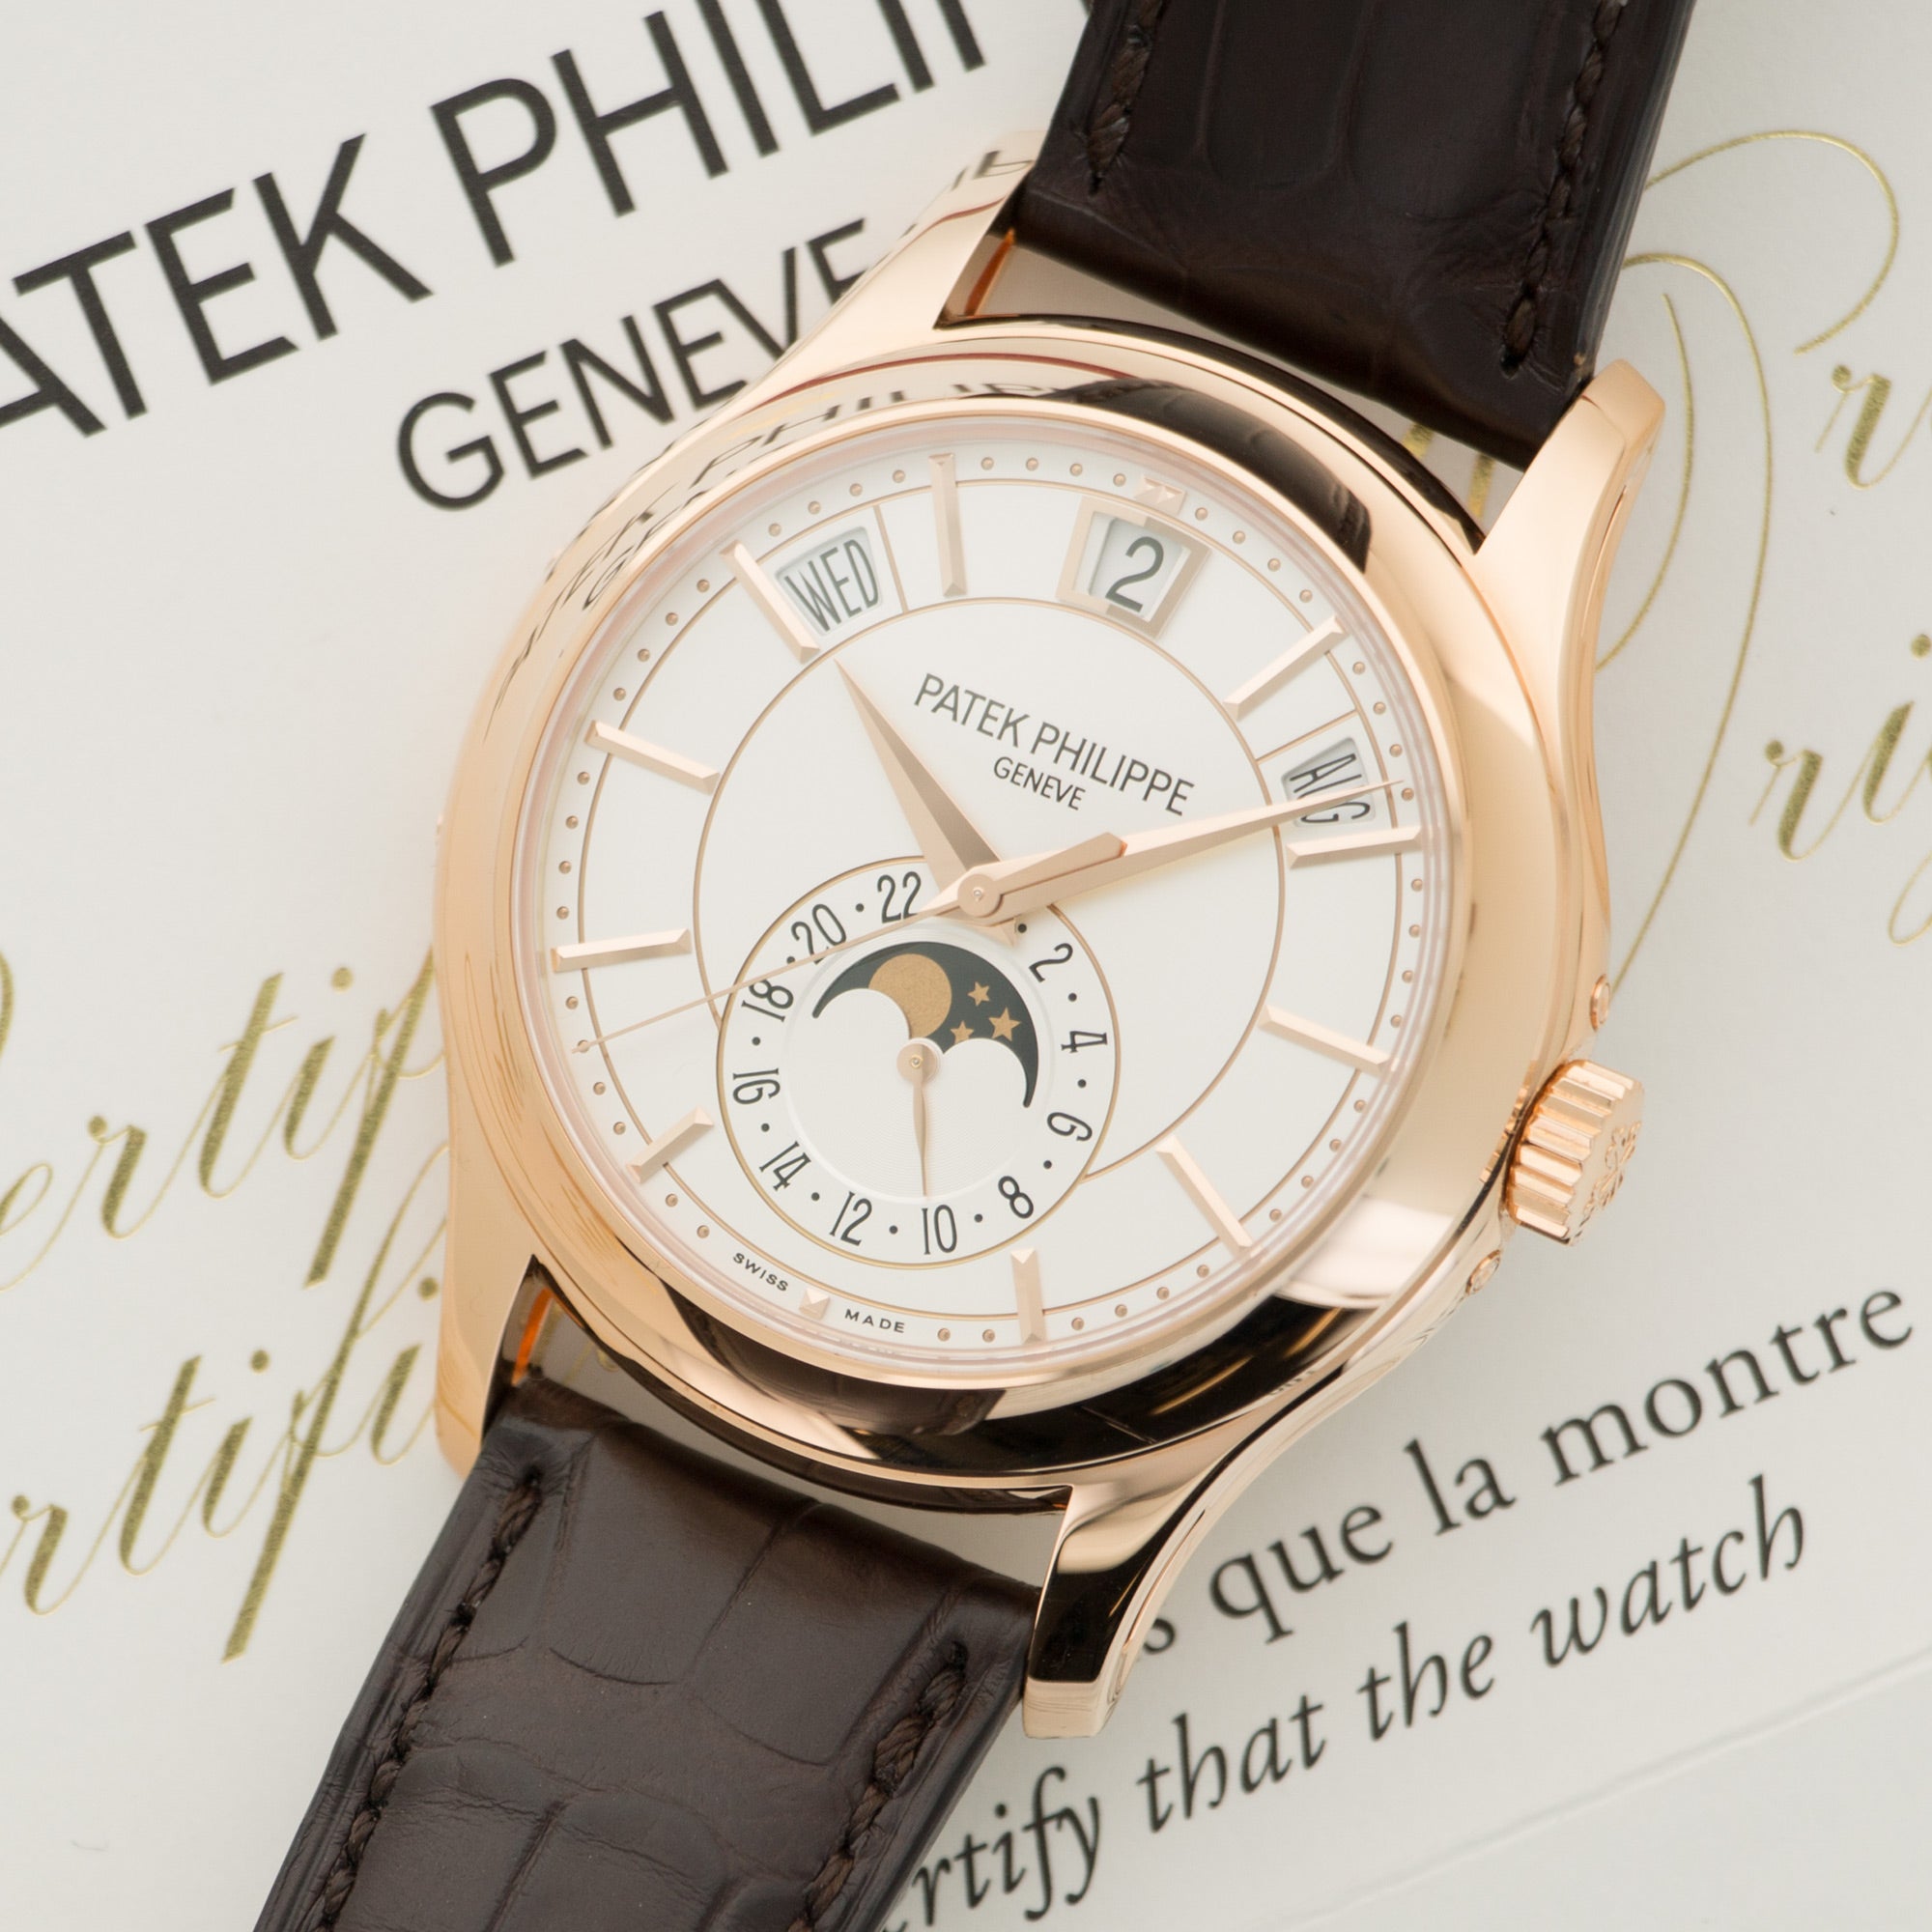 Patek Philippe - Patek Philippe Rose Gold Annual Calendar Moonphase Watch Ref. 5205 - The Keystone Watches